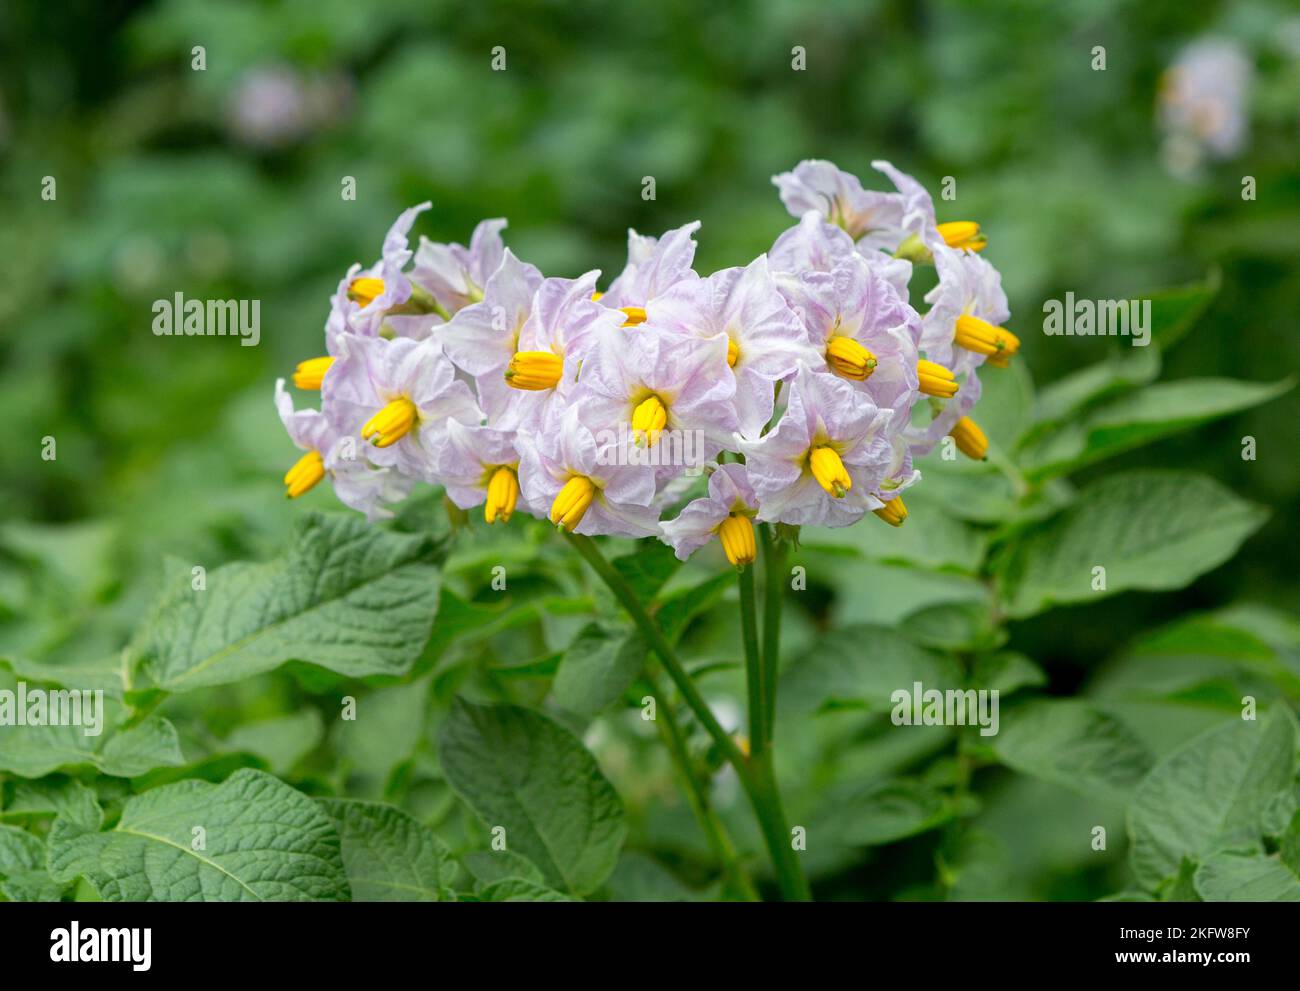 Flowering potato. Potato flowers , blurred background the garden close-up. Stock Photo